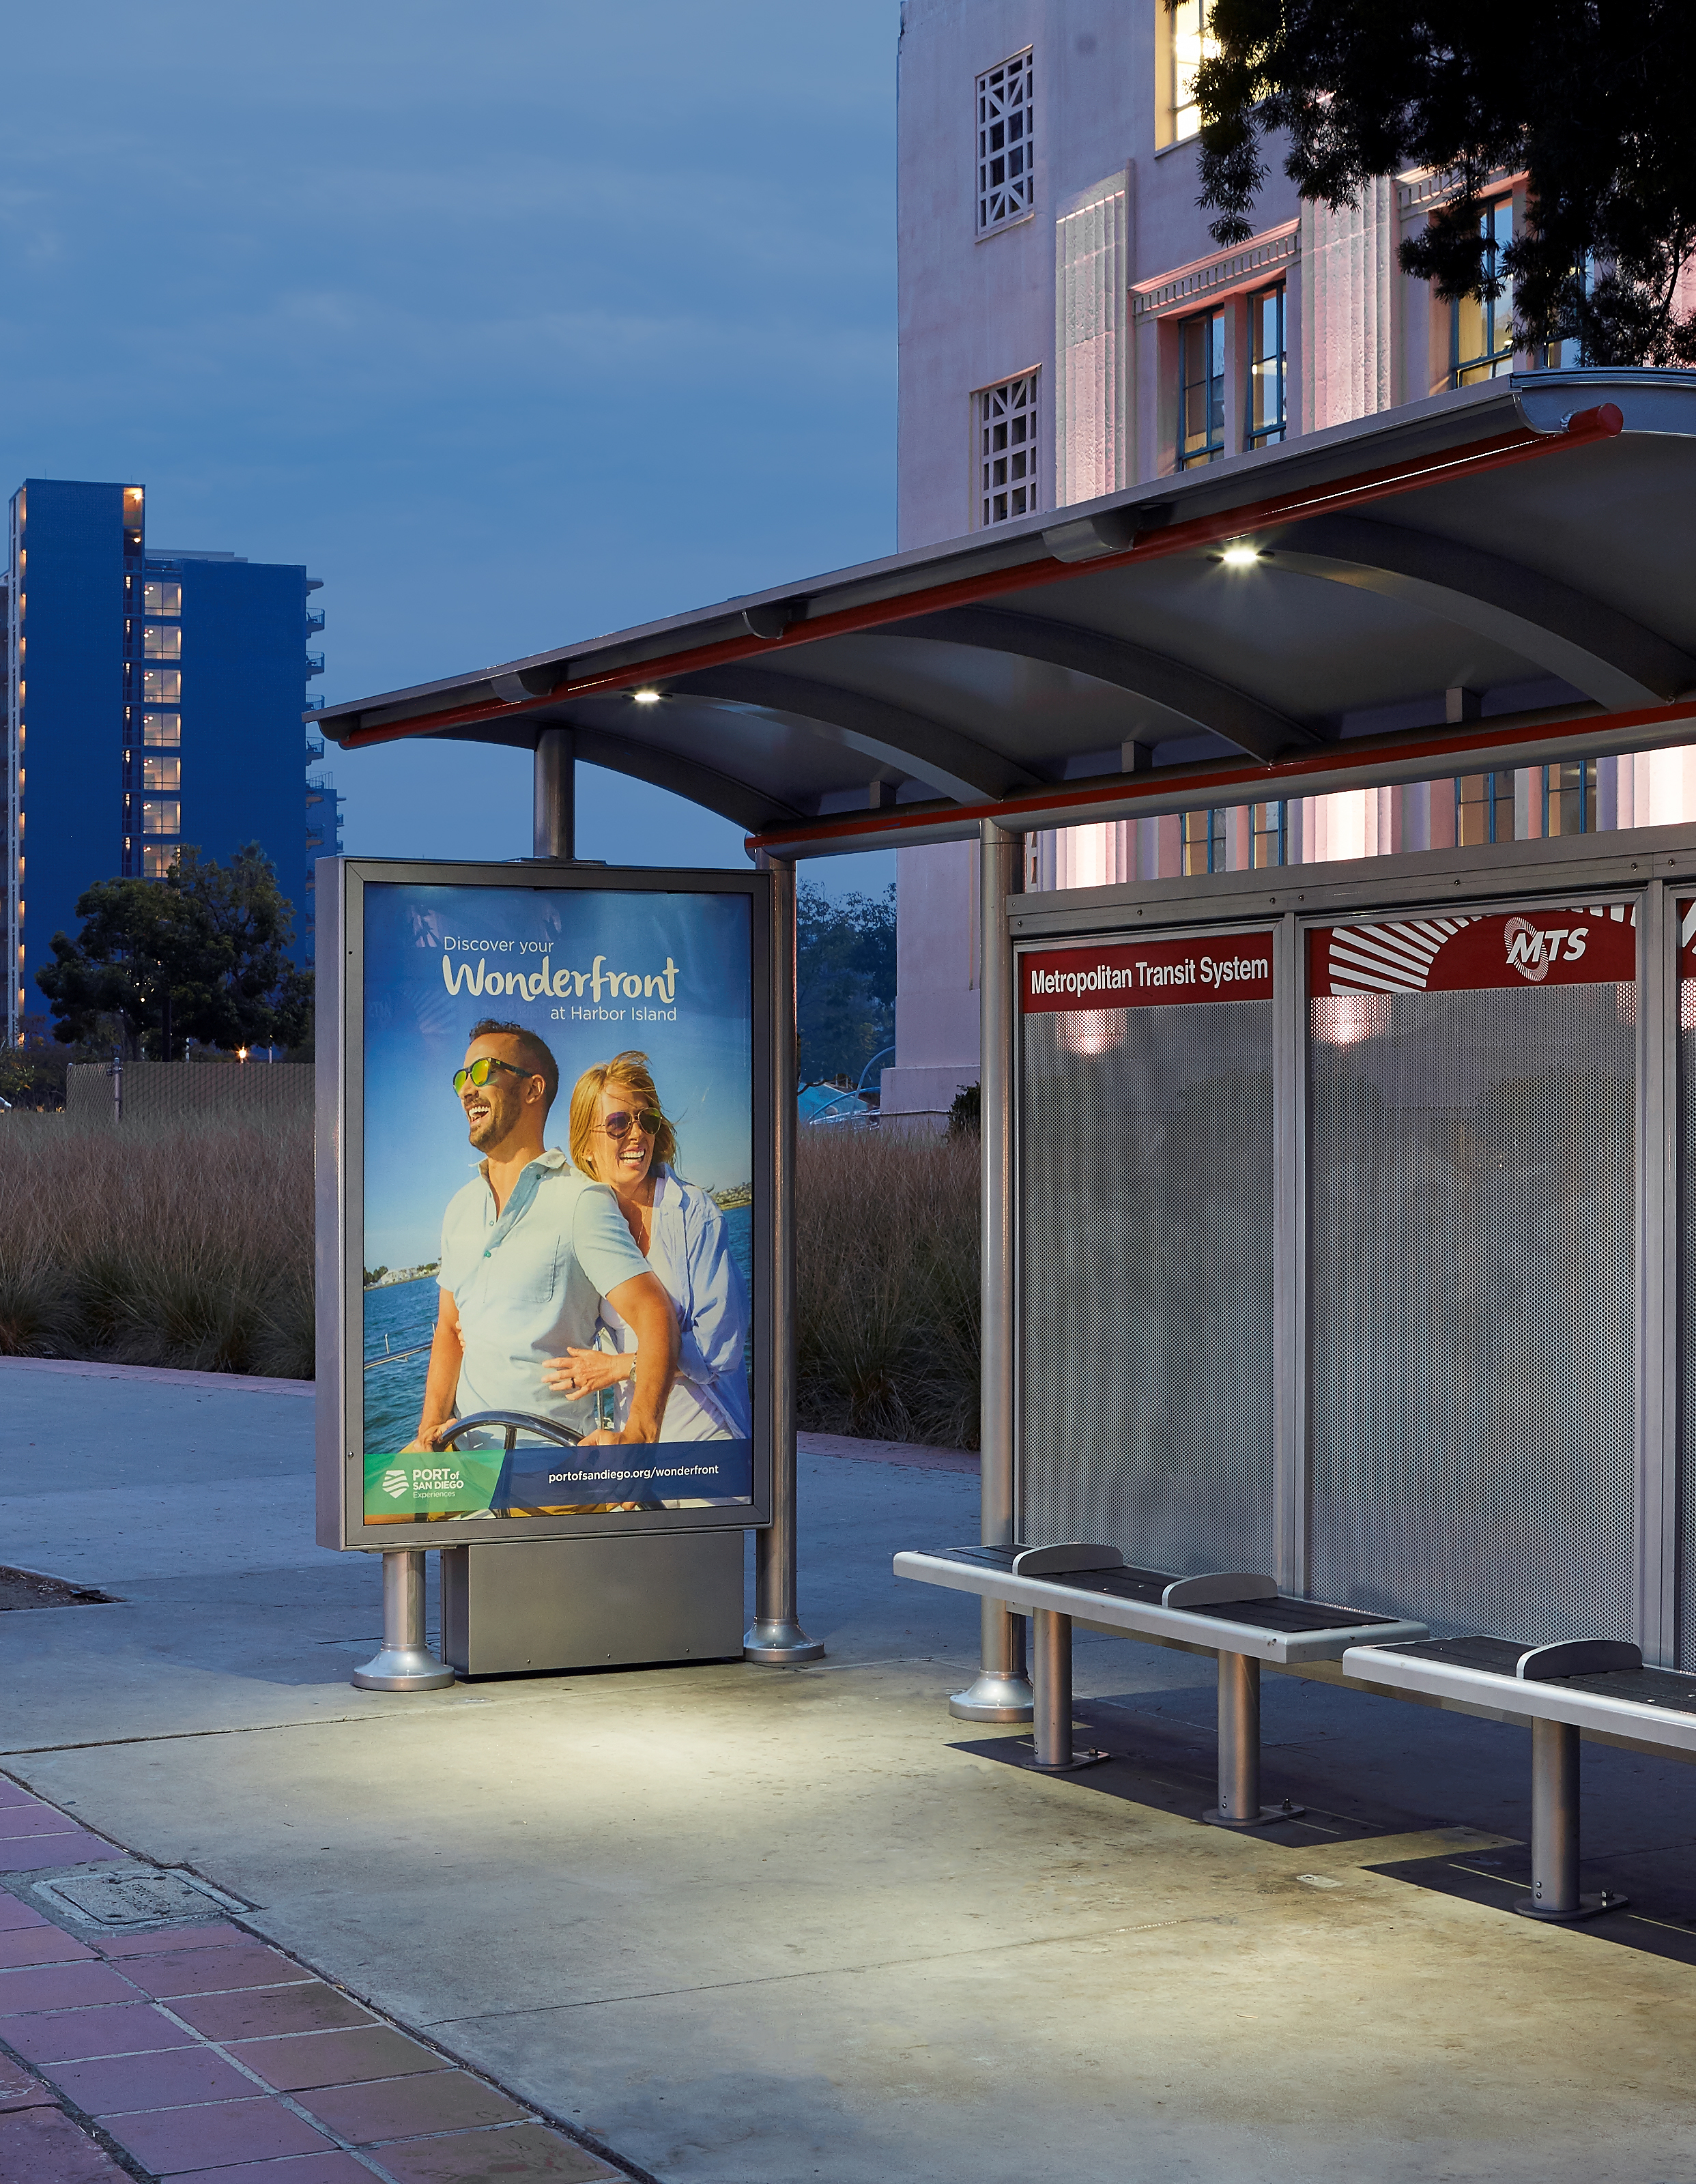 The PV-AD lighting illuminates a bus shelter advertisement.